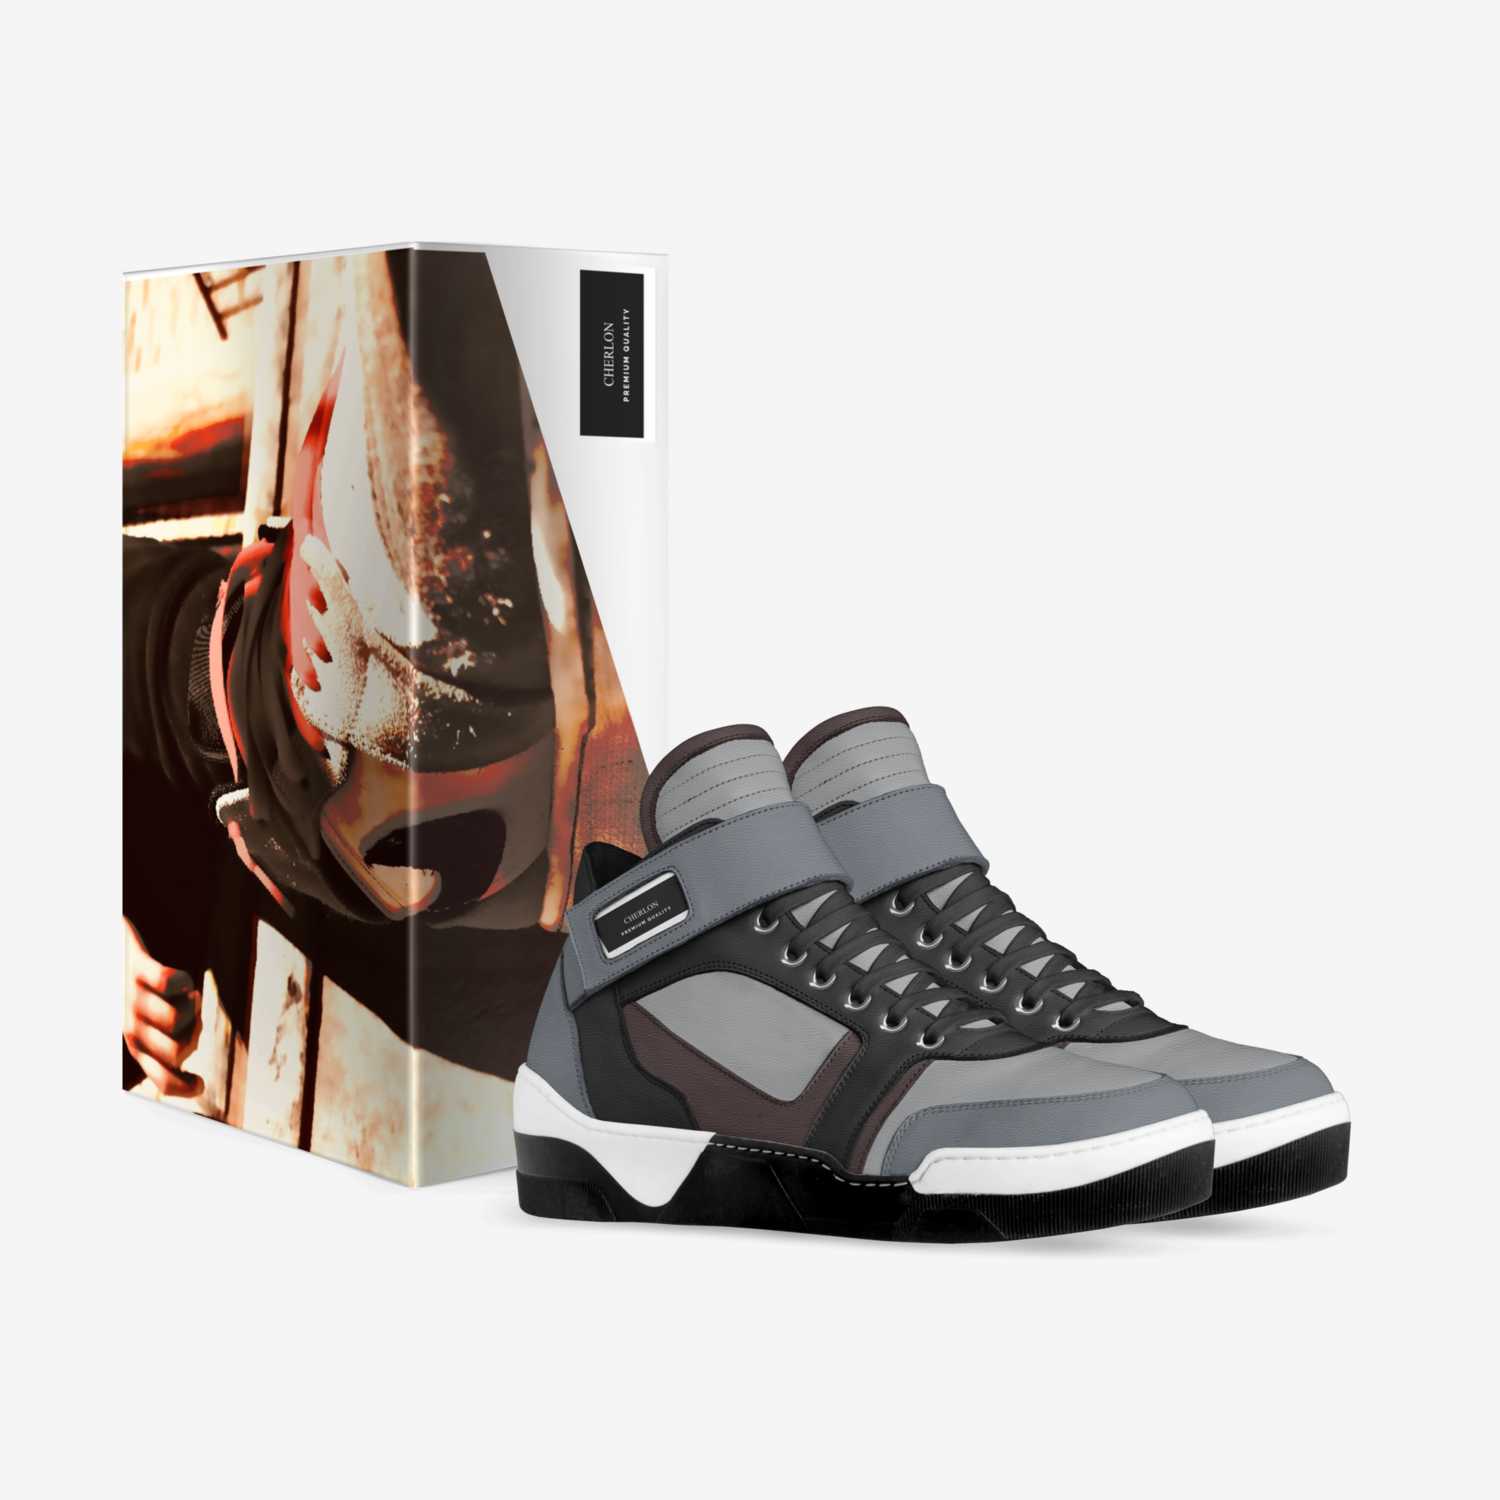 Cherlon custom made in Italy shoes by David Metreveli | Box view